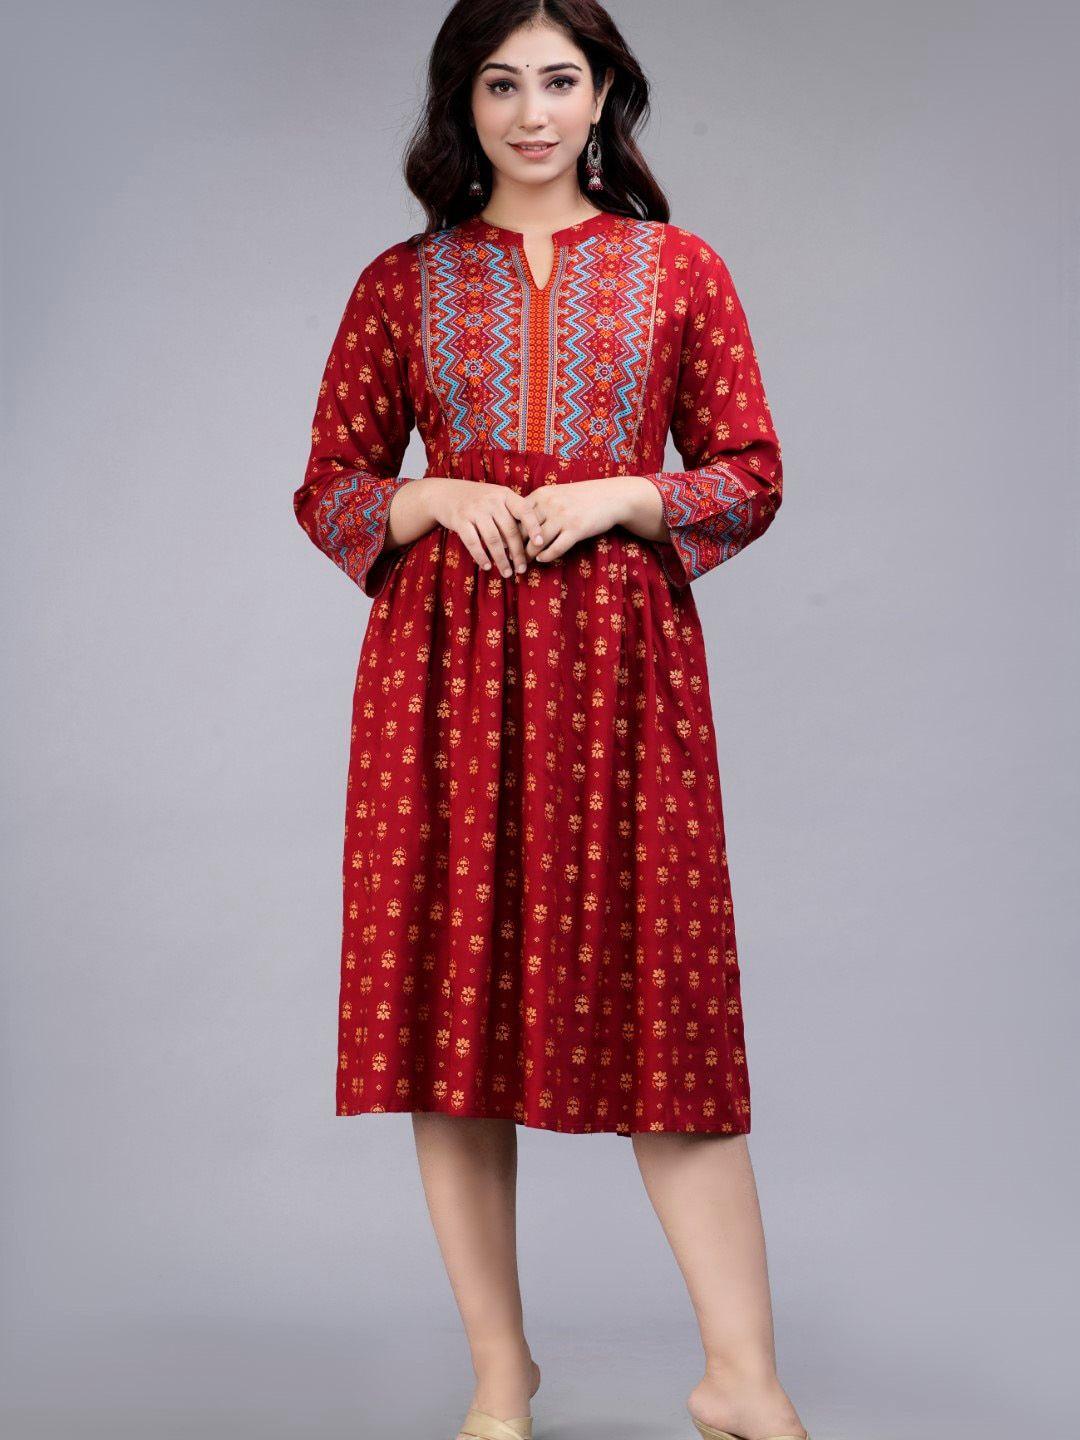 sipet ethnic motifs printed midi a-line ethnic dress